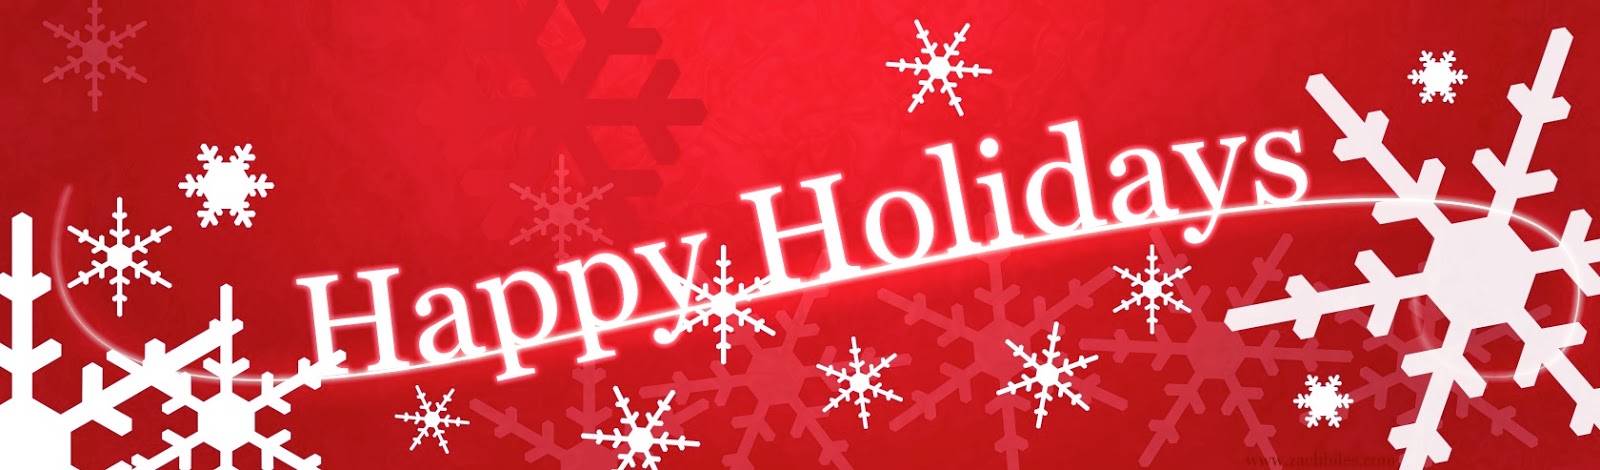 clip art happy holidays banner - photo #17